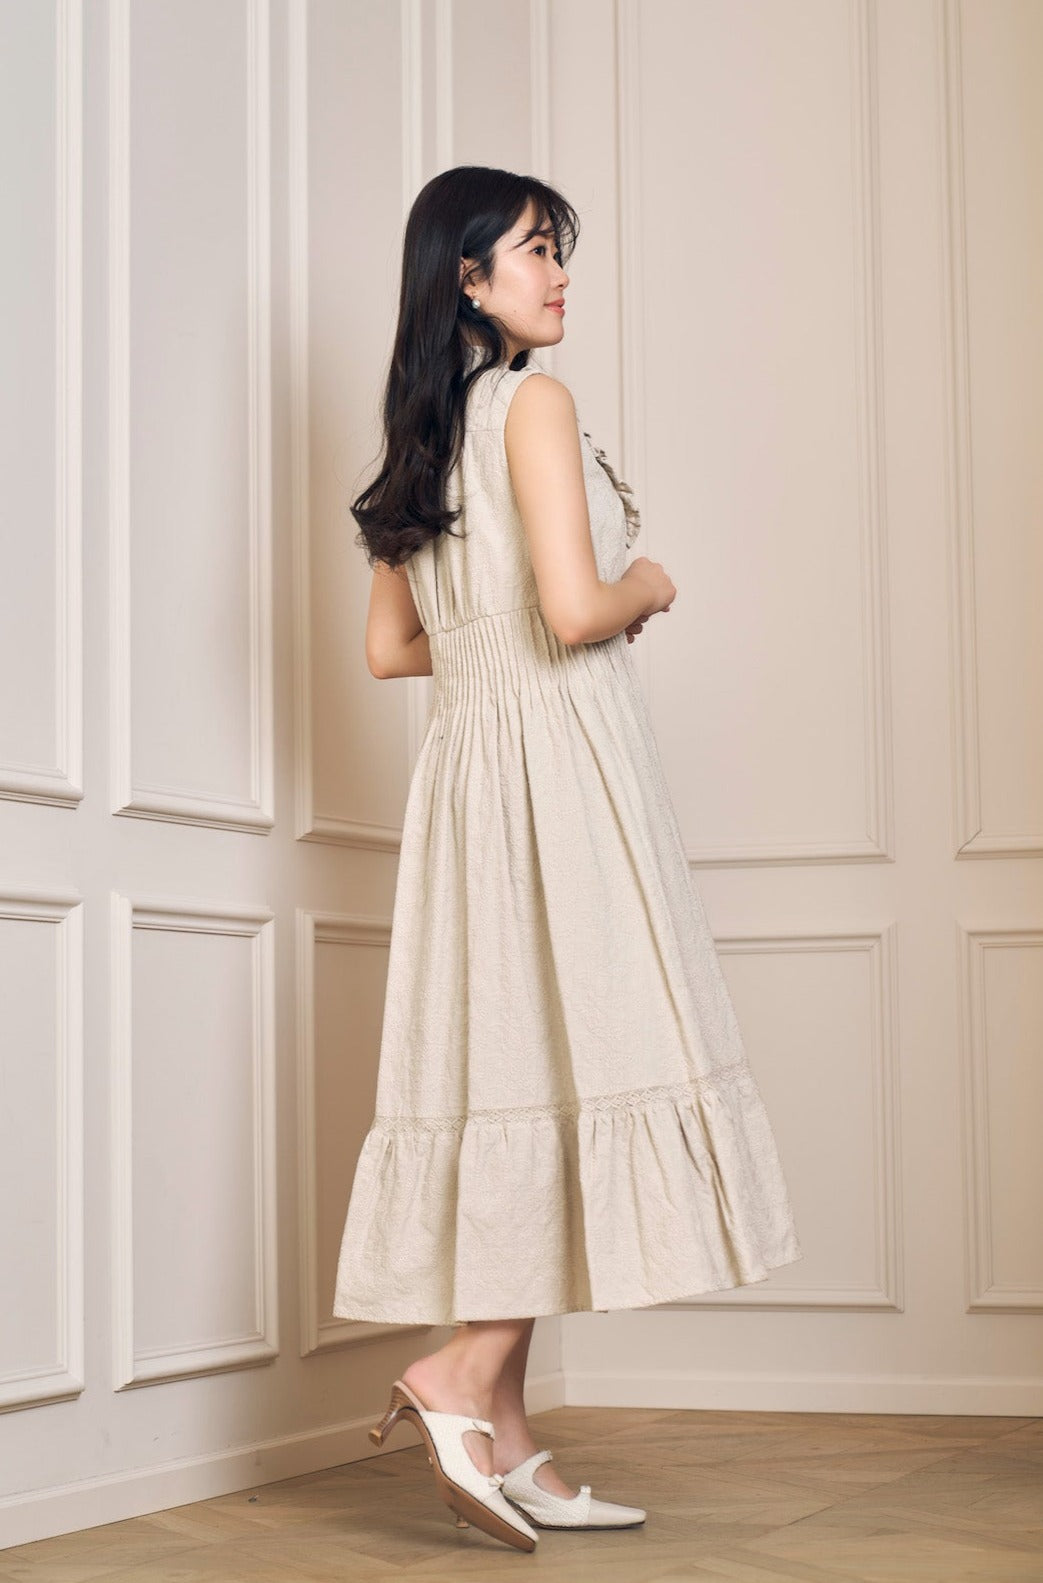 Paisley Cotton Lace Long Dress